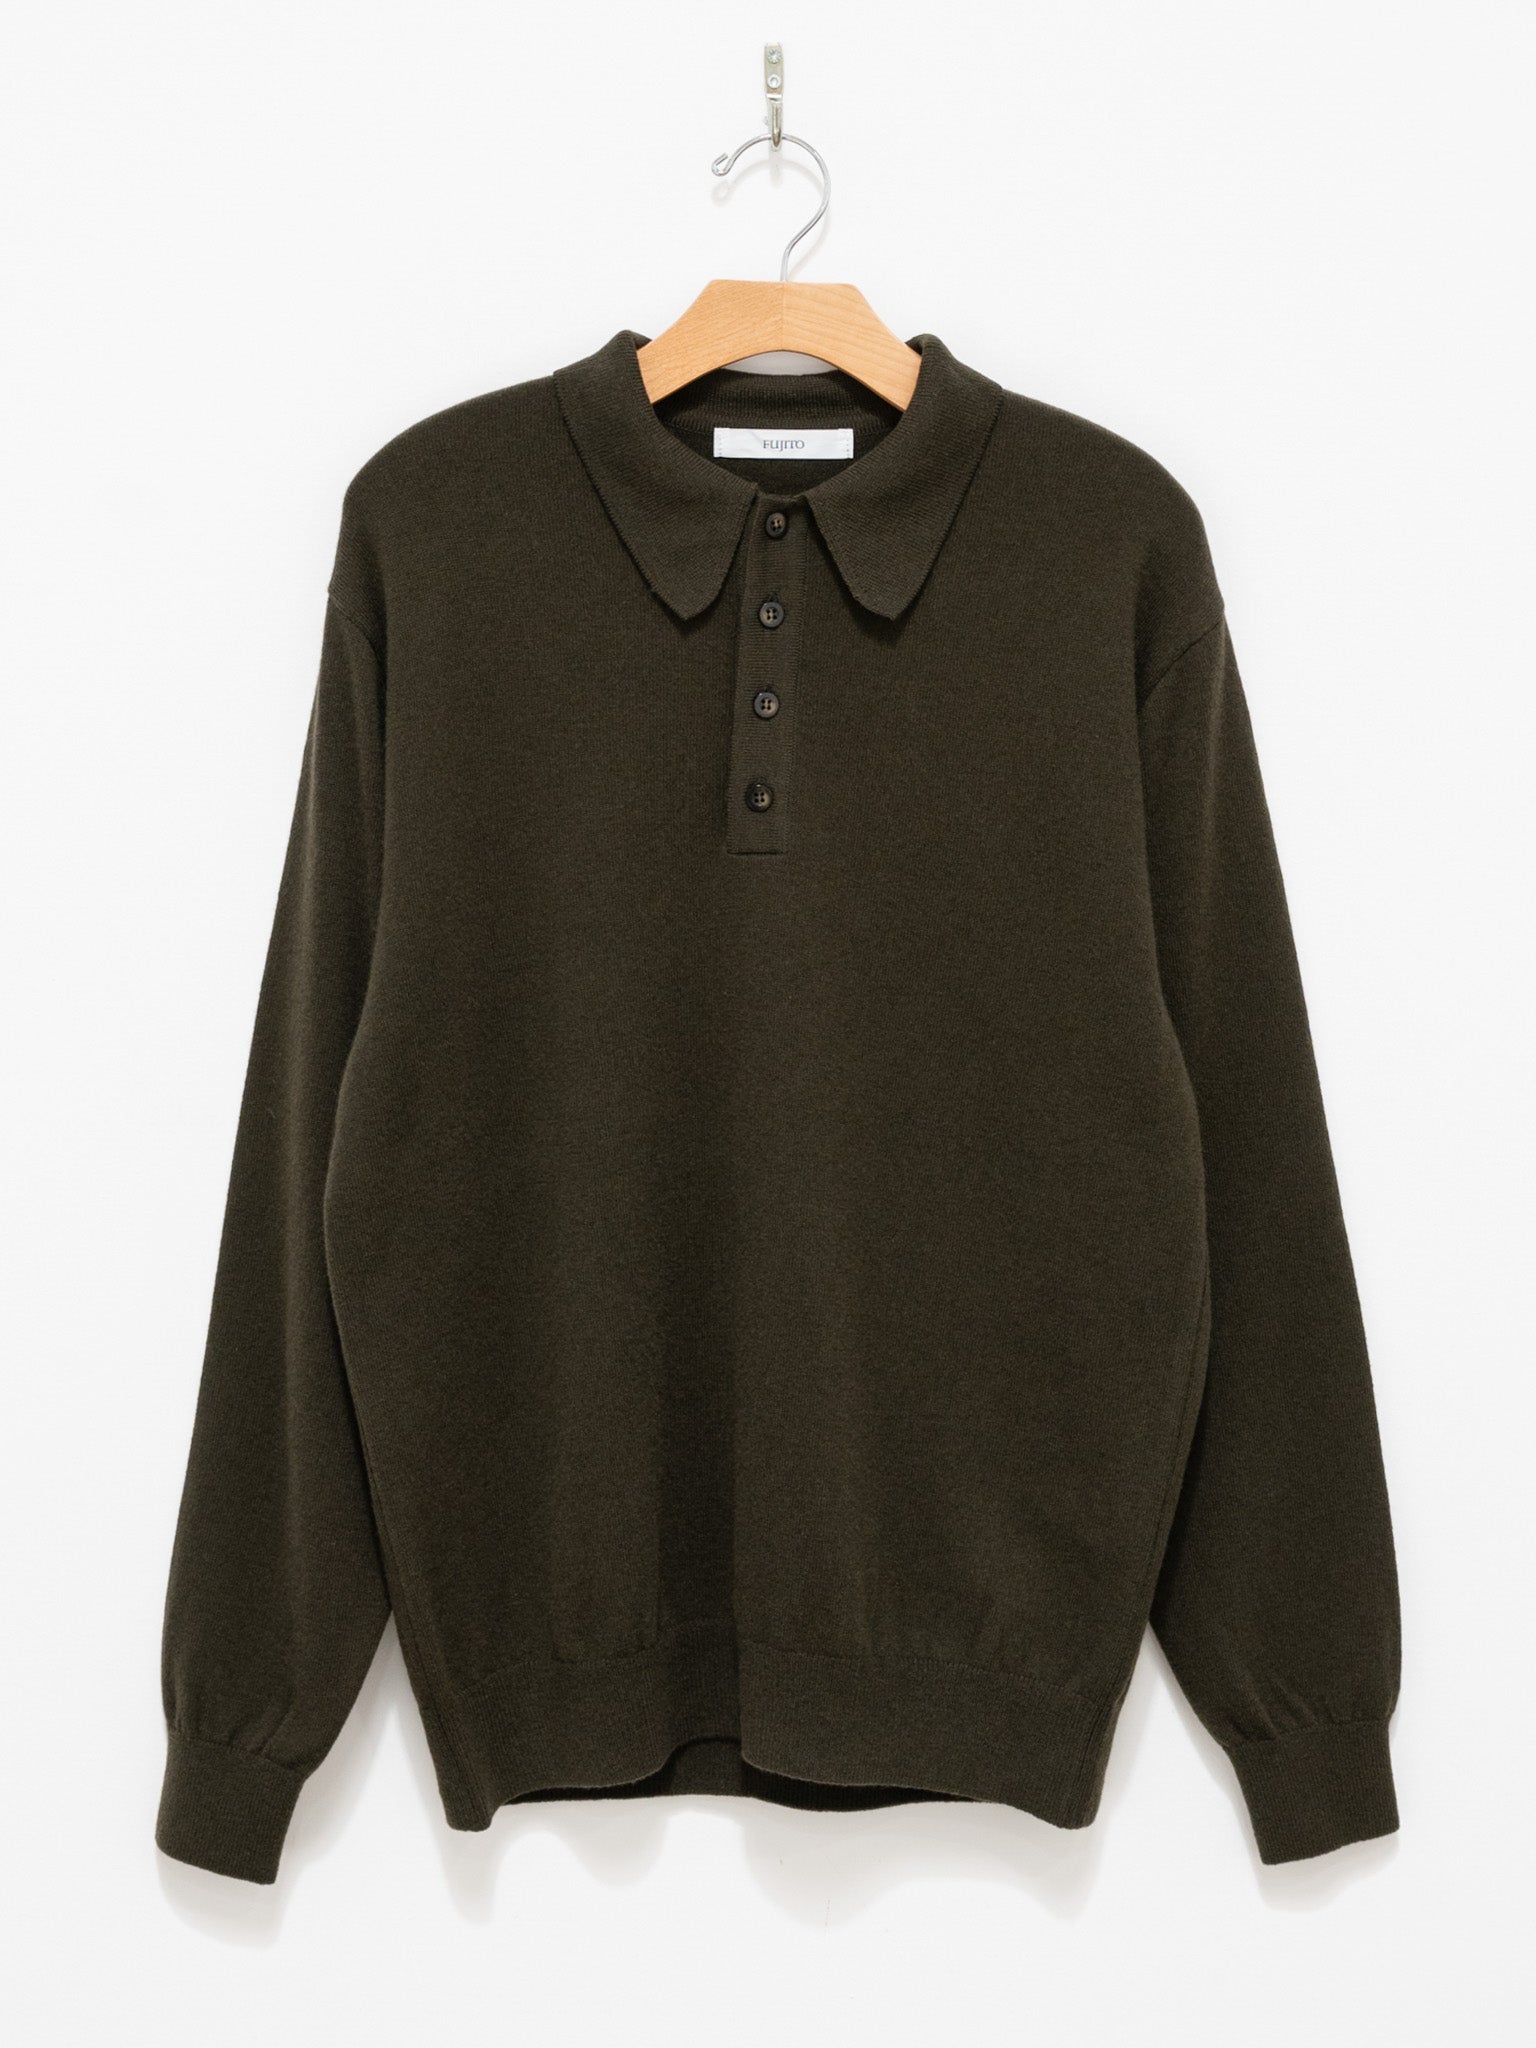 Namu Shop - Fujito Wool Cashmere Knit Polo - Olive Green